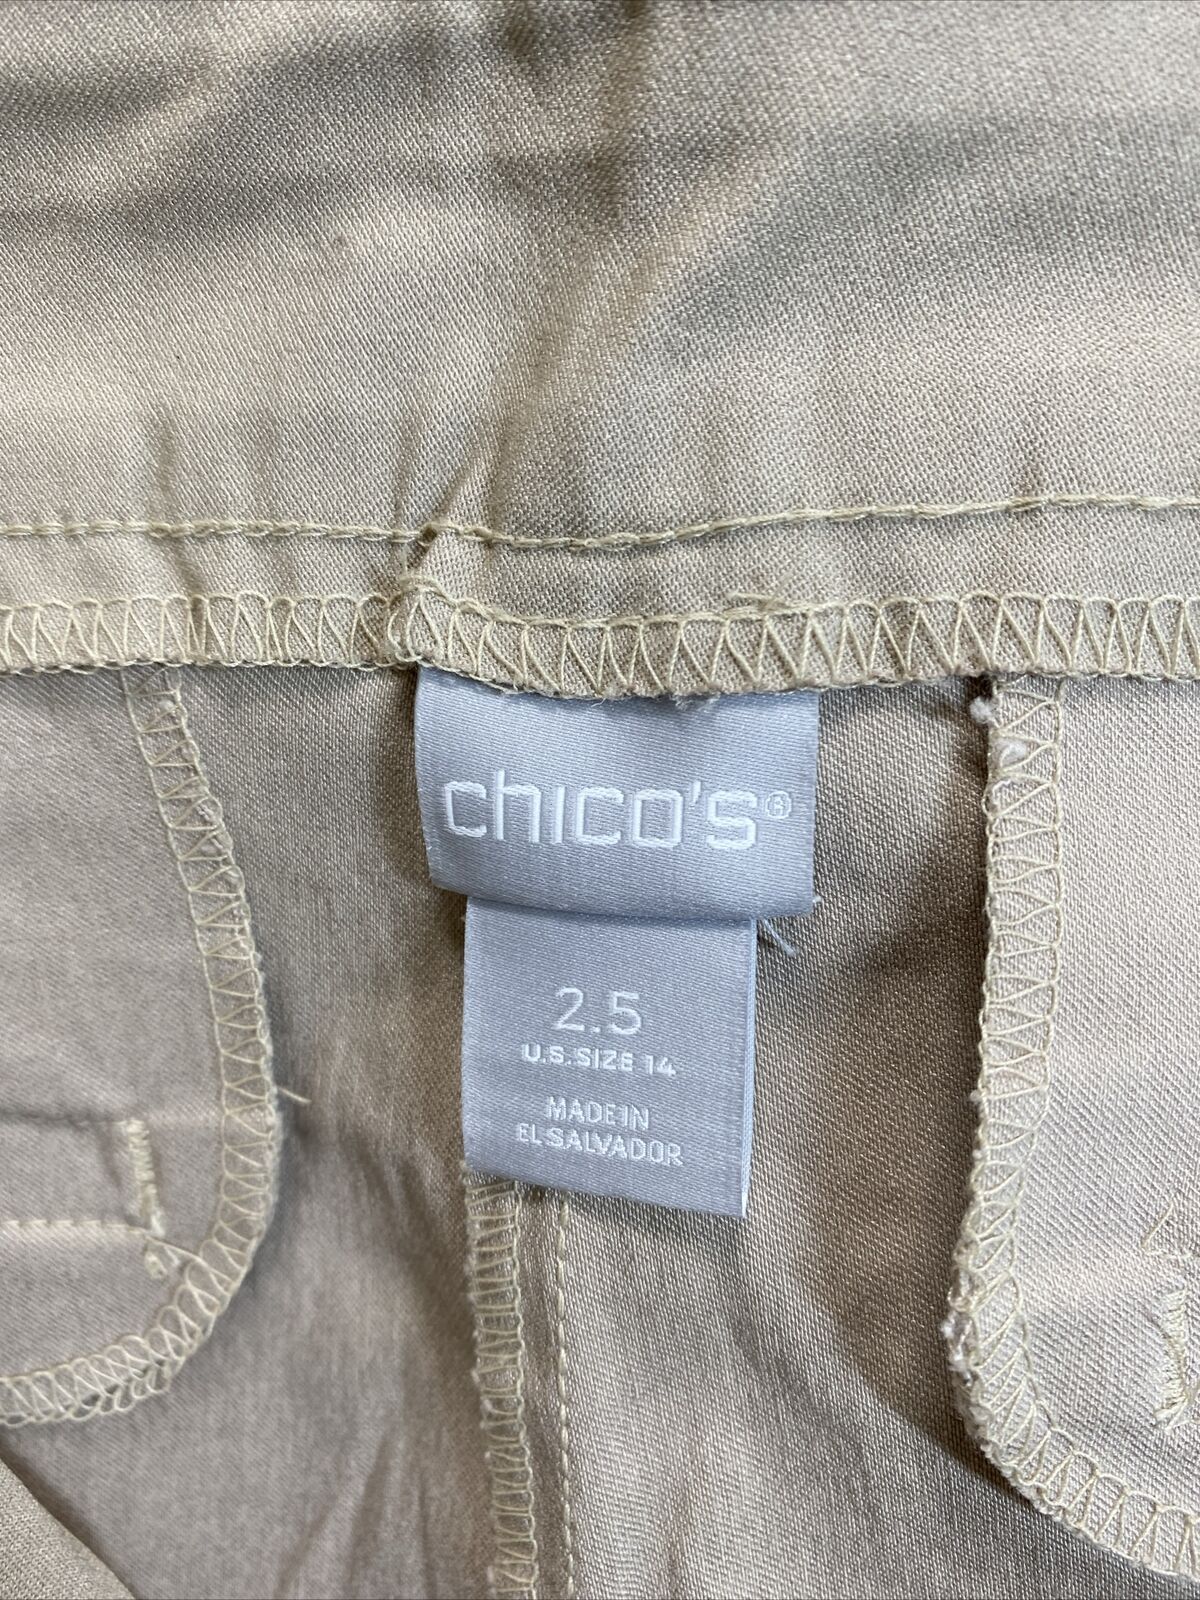 Chico's Women's Beige So Slimming Brigitte Capri Pants - 2.5/14